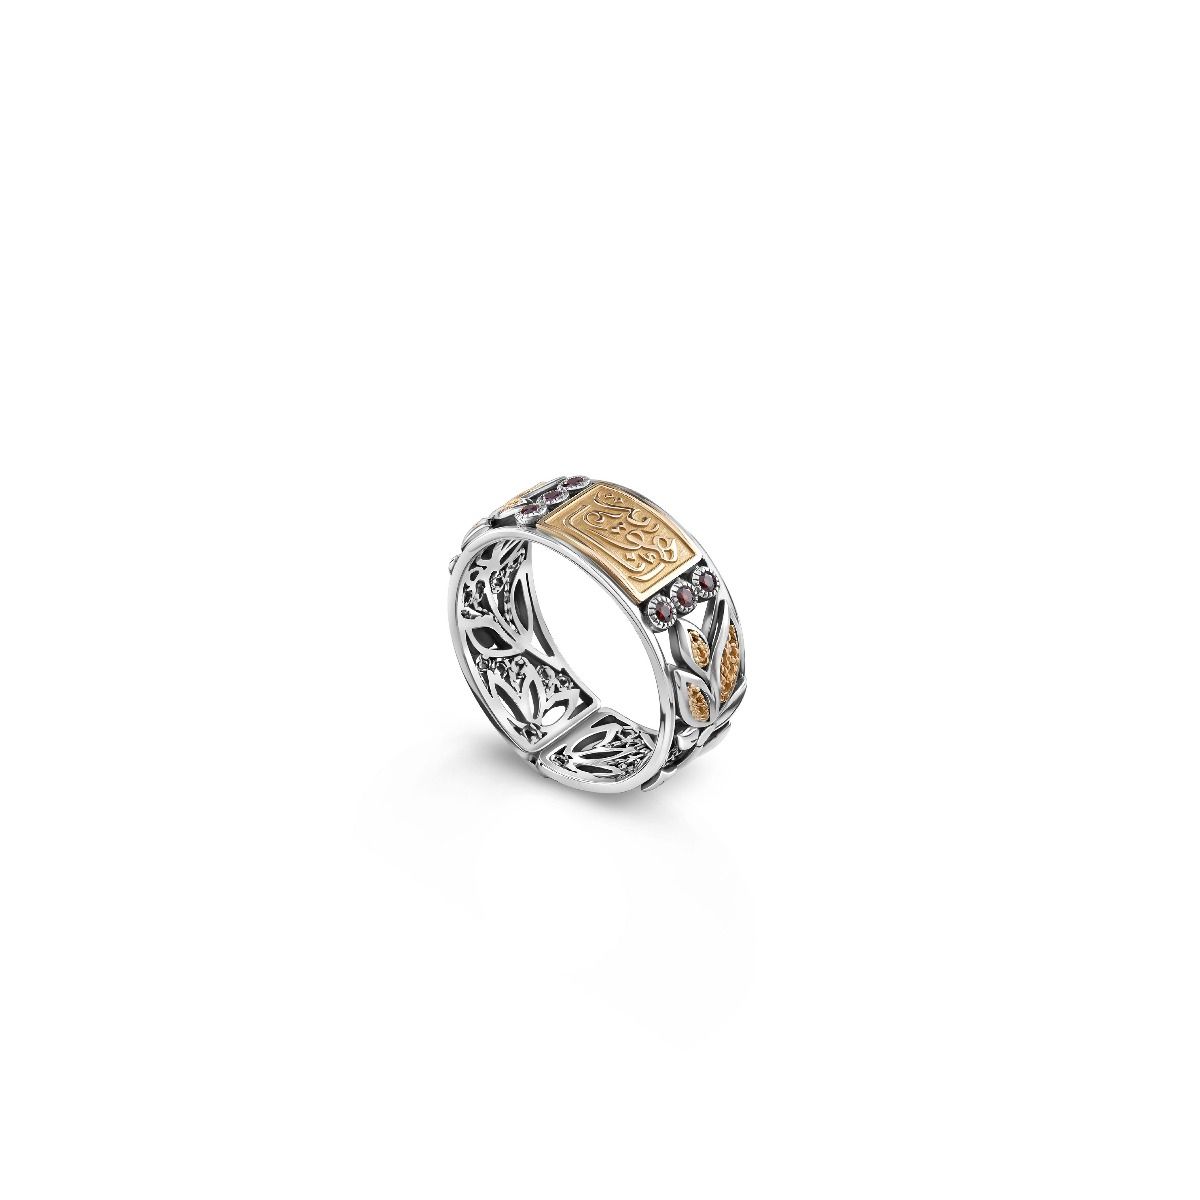 Sayed Darwish Ring by Azza Fahmy - Labradorite - Champagne Diamonds - Designer Rings